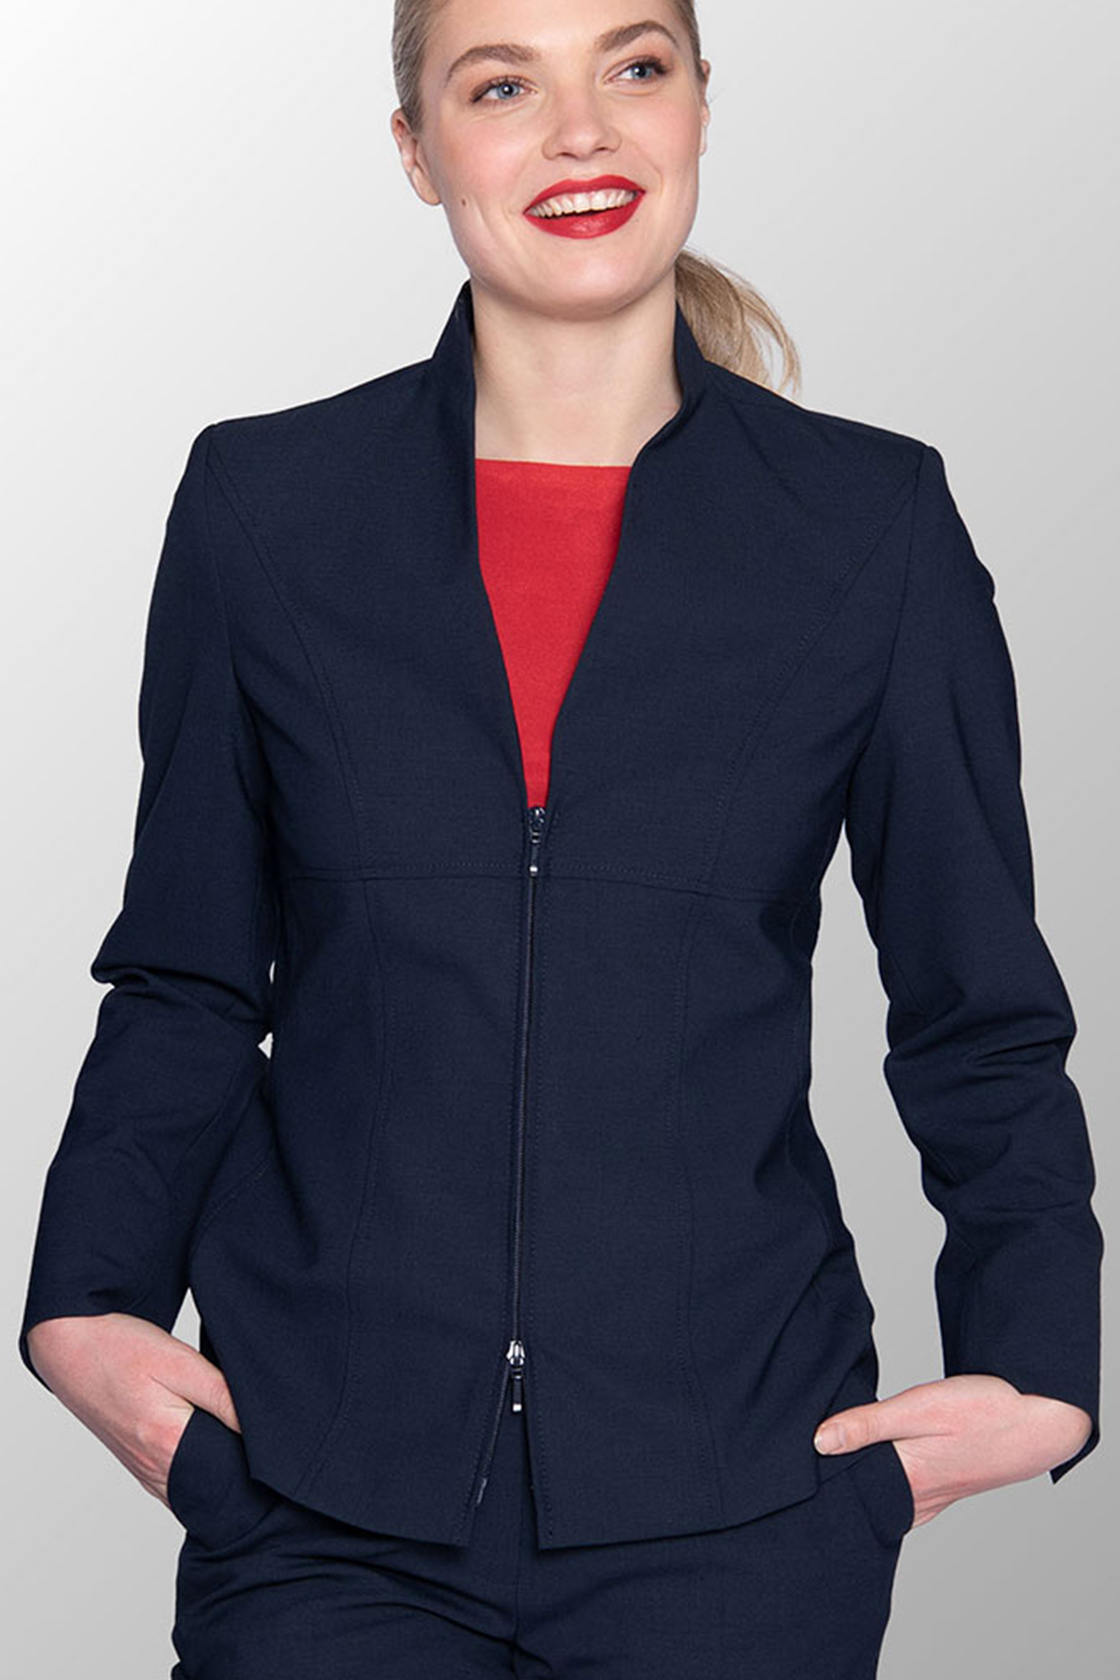 Bedrijfskleding Jaarbeurs Complete outfit: blauwe jack, broek en rood shirt